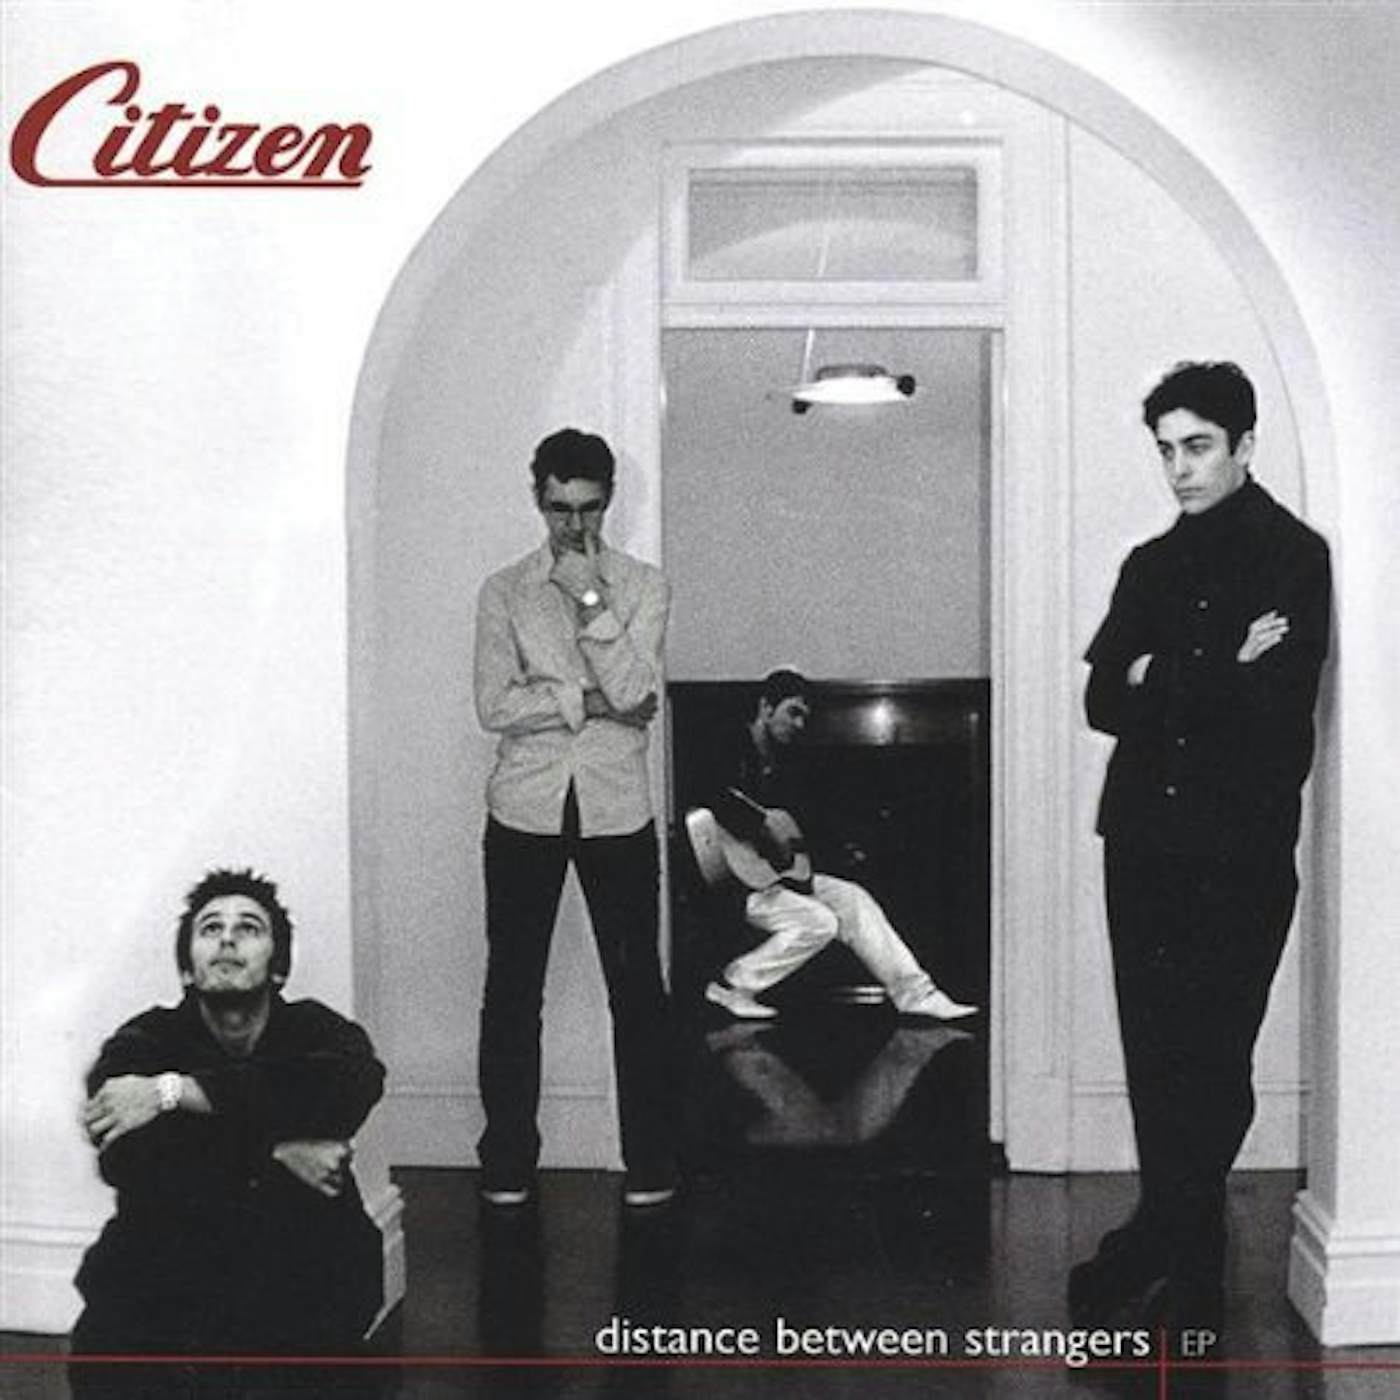 Citizen DISTANCE BETWEEN STRANGERS CD